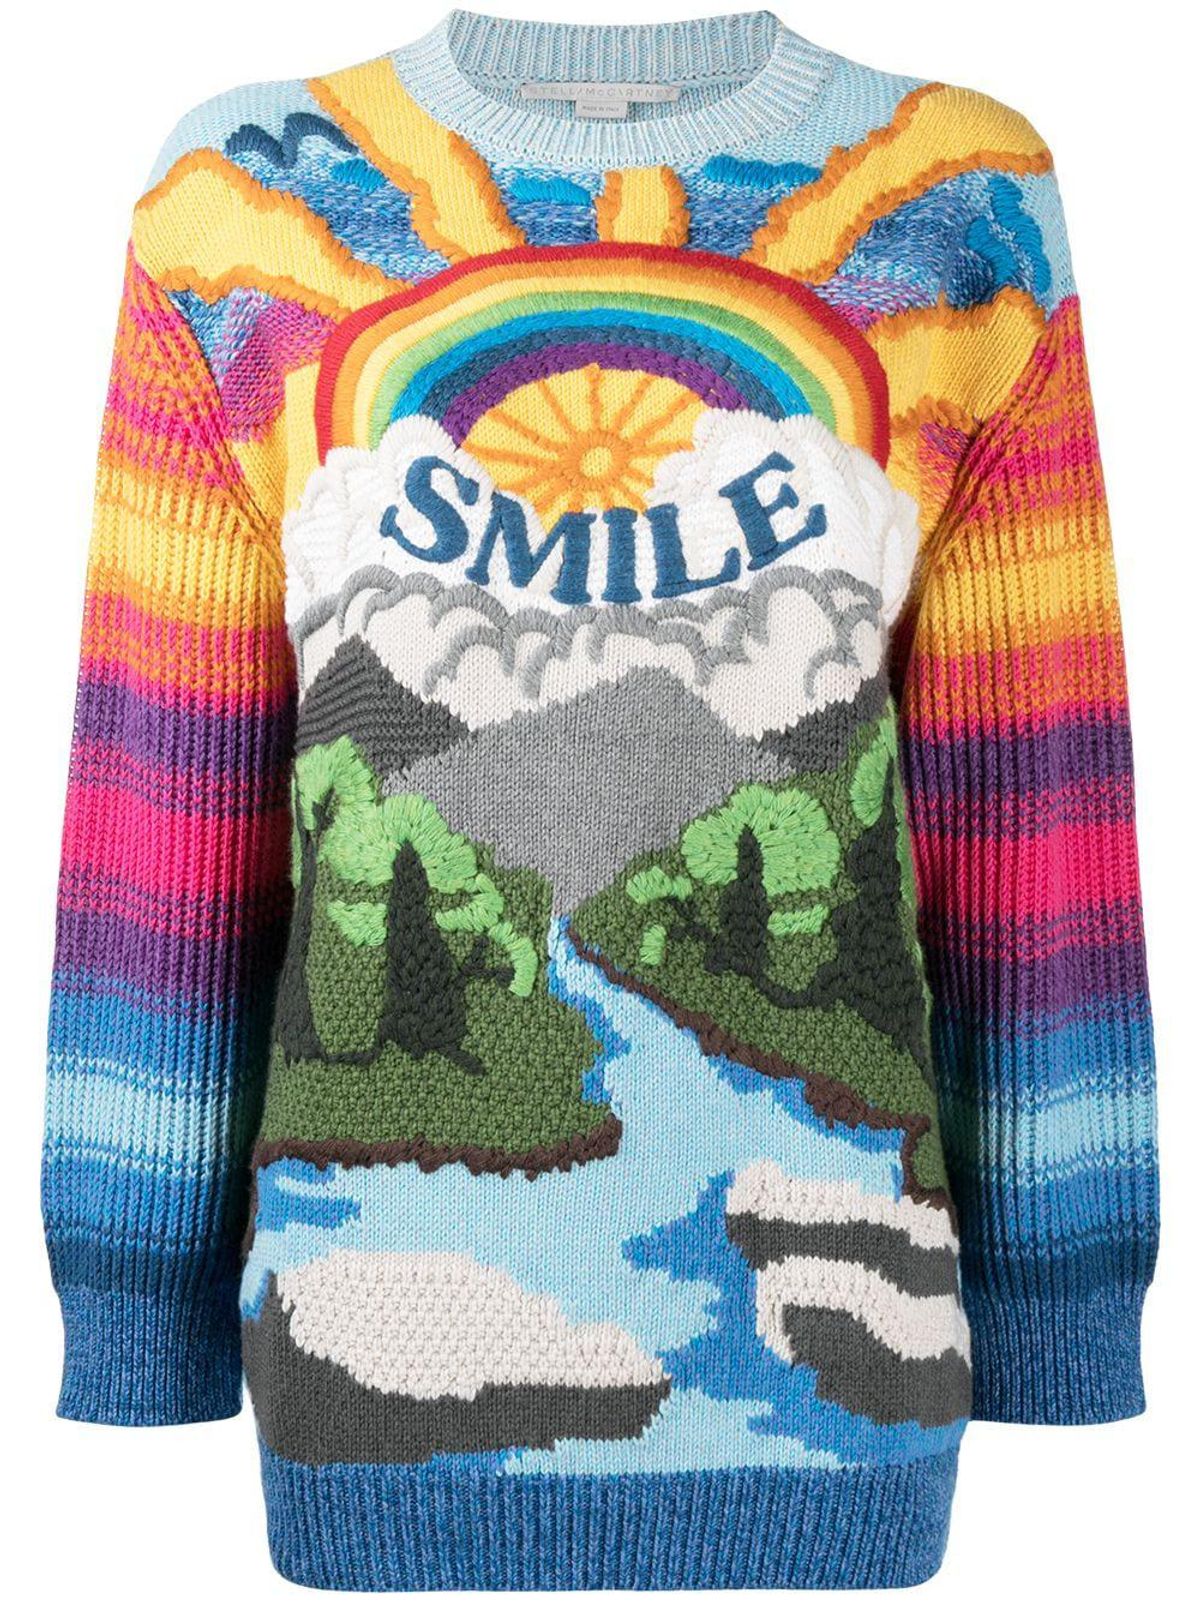 stella mccartney smile rainbow jumper